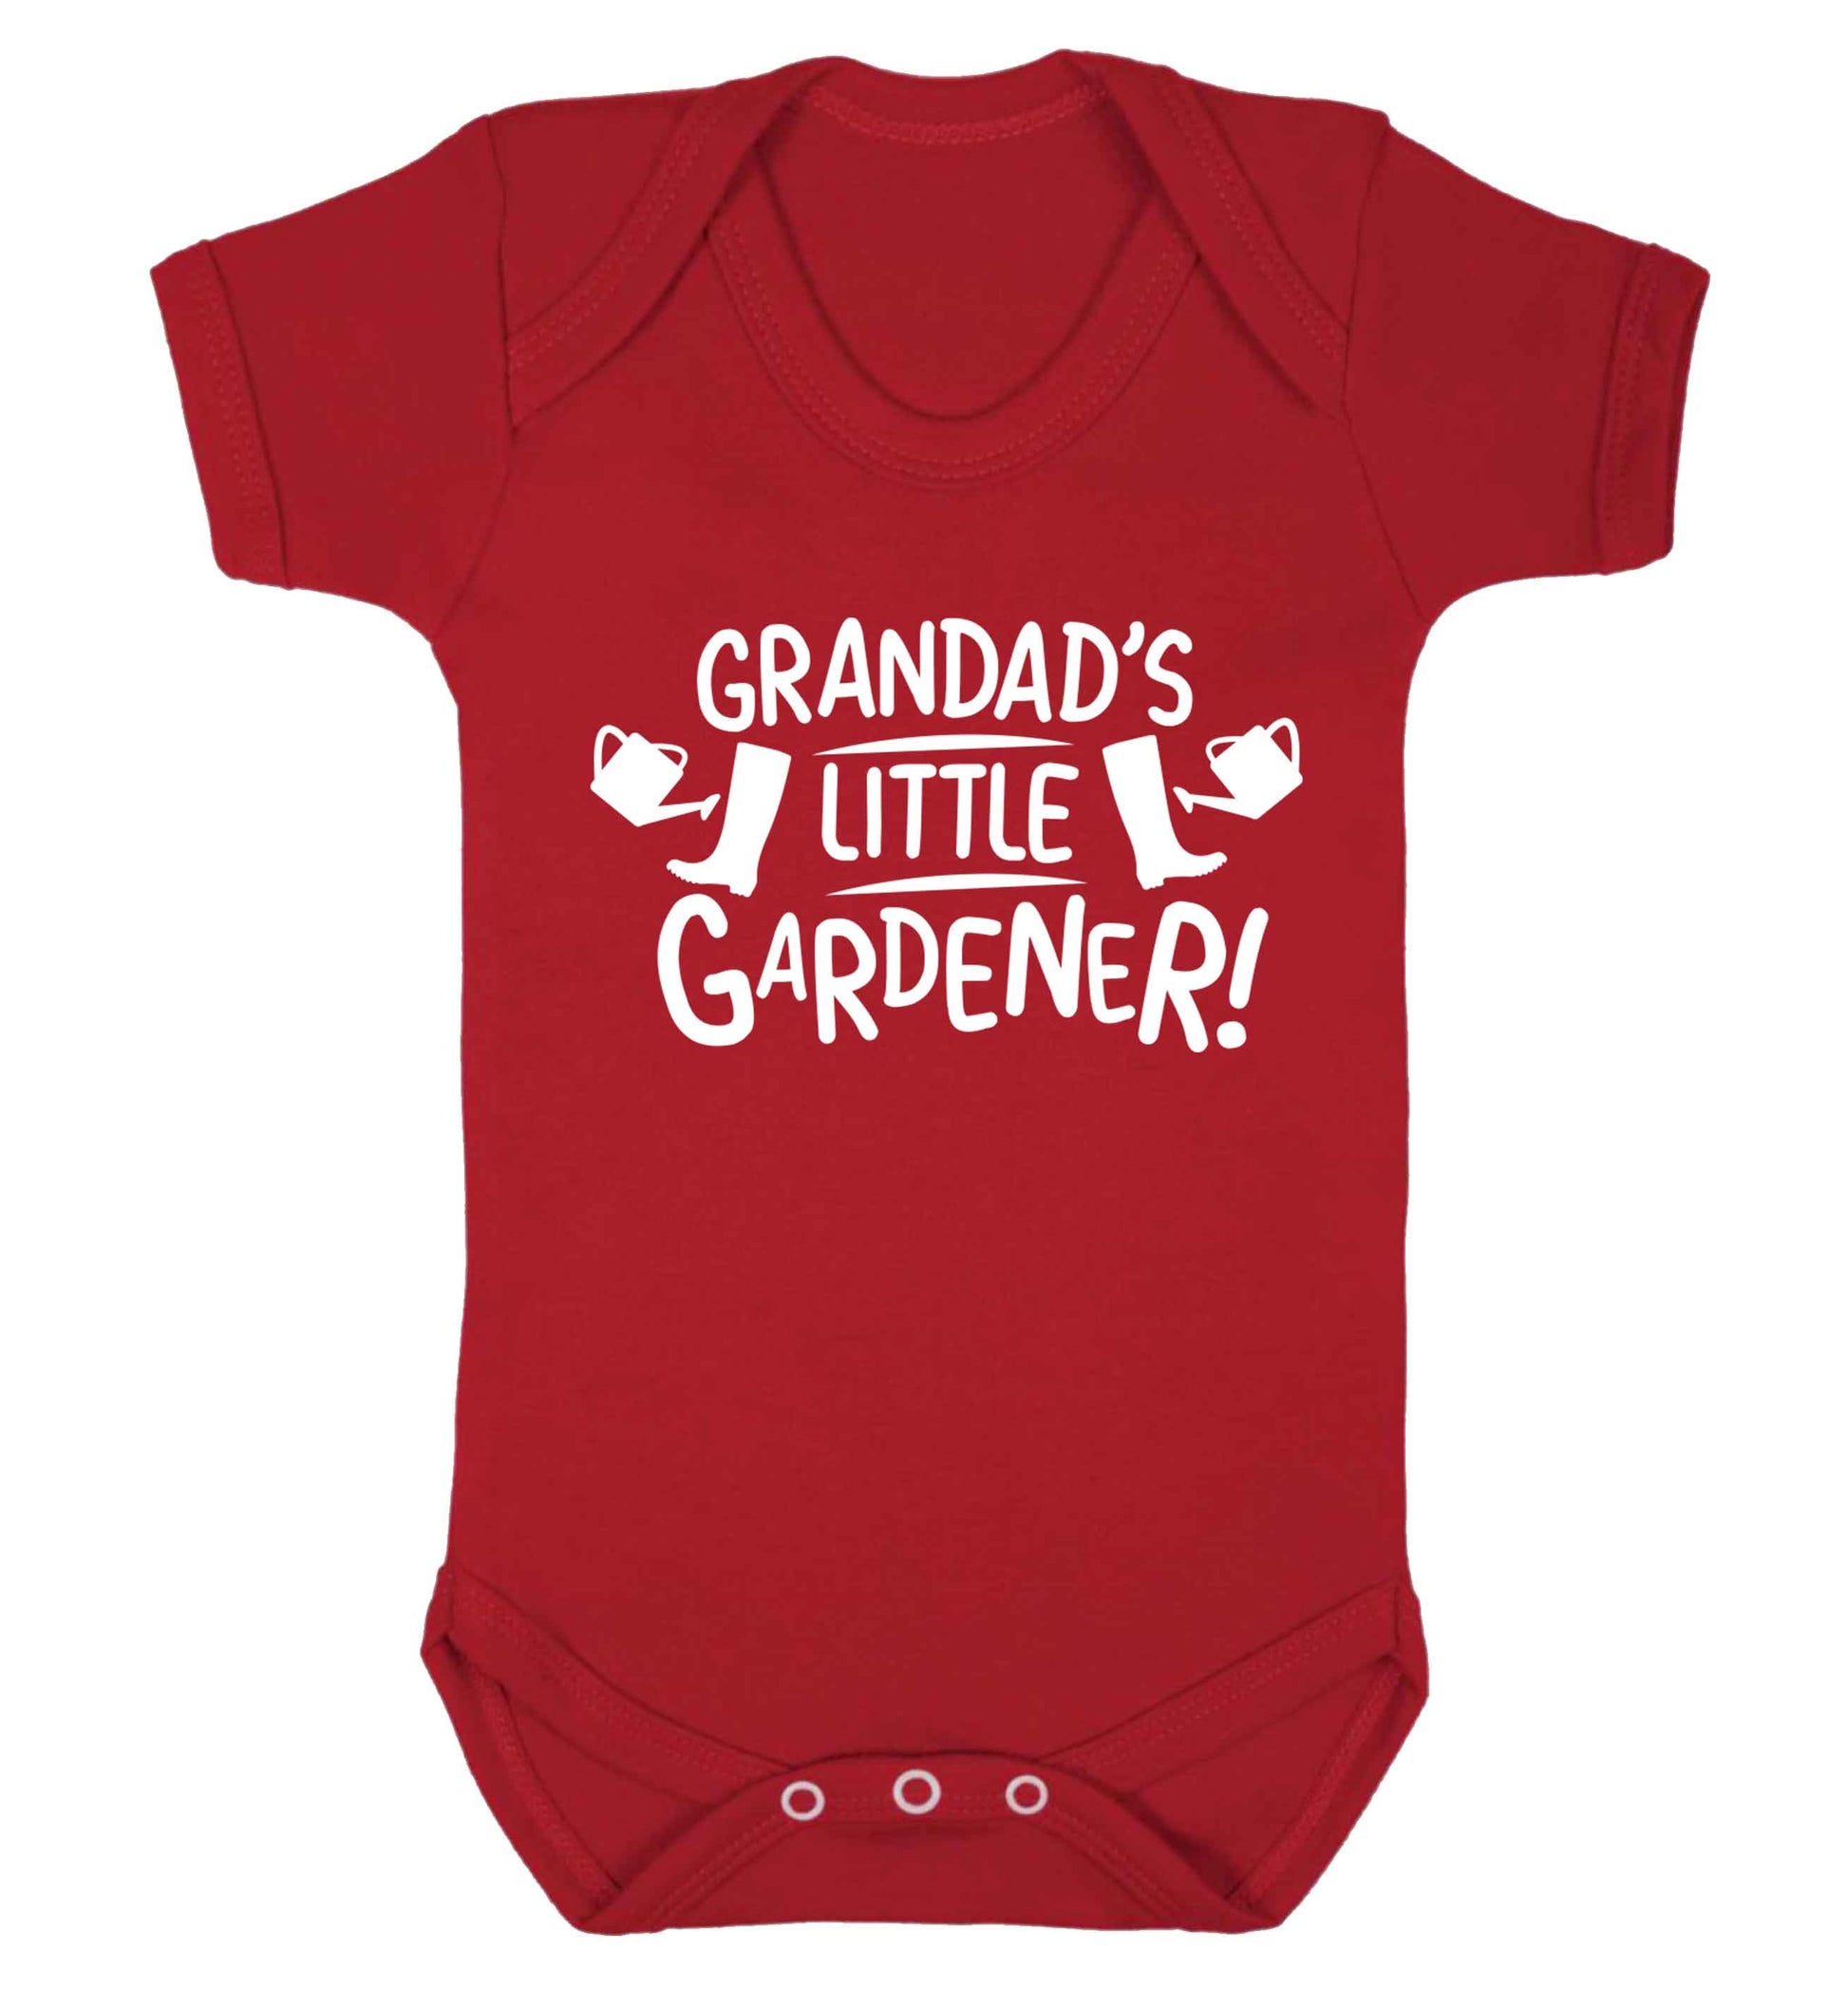 Grandad's little gardener Baby Vest red 18-24 months